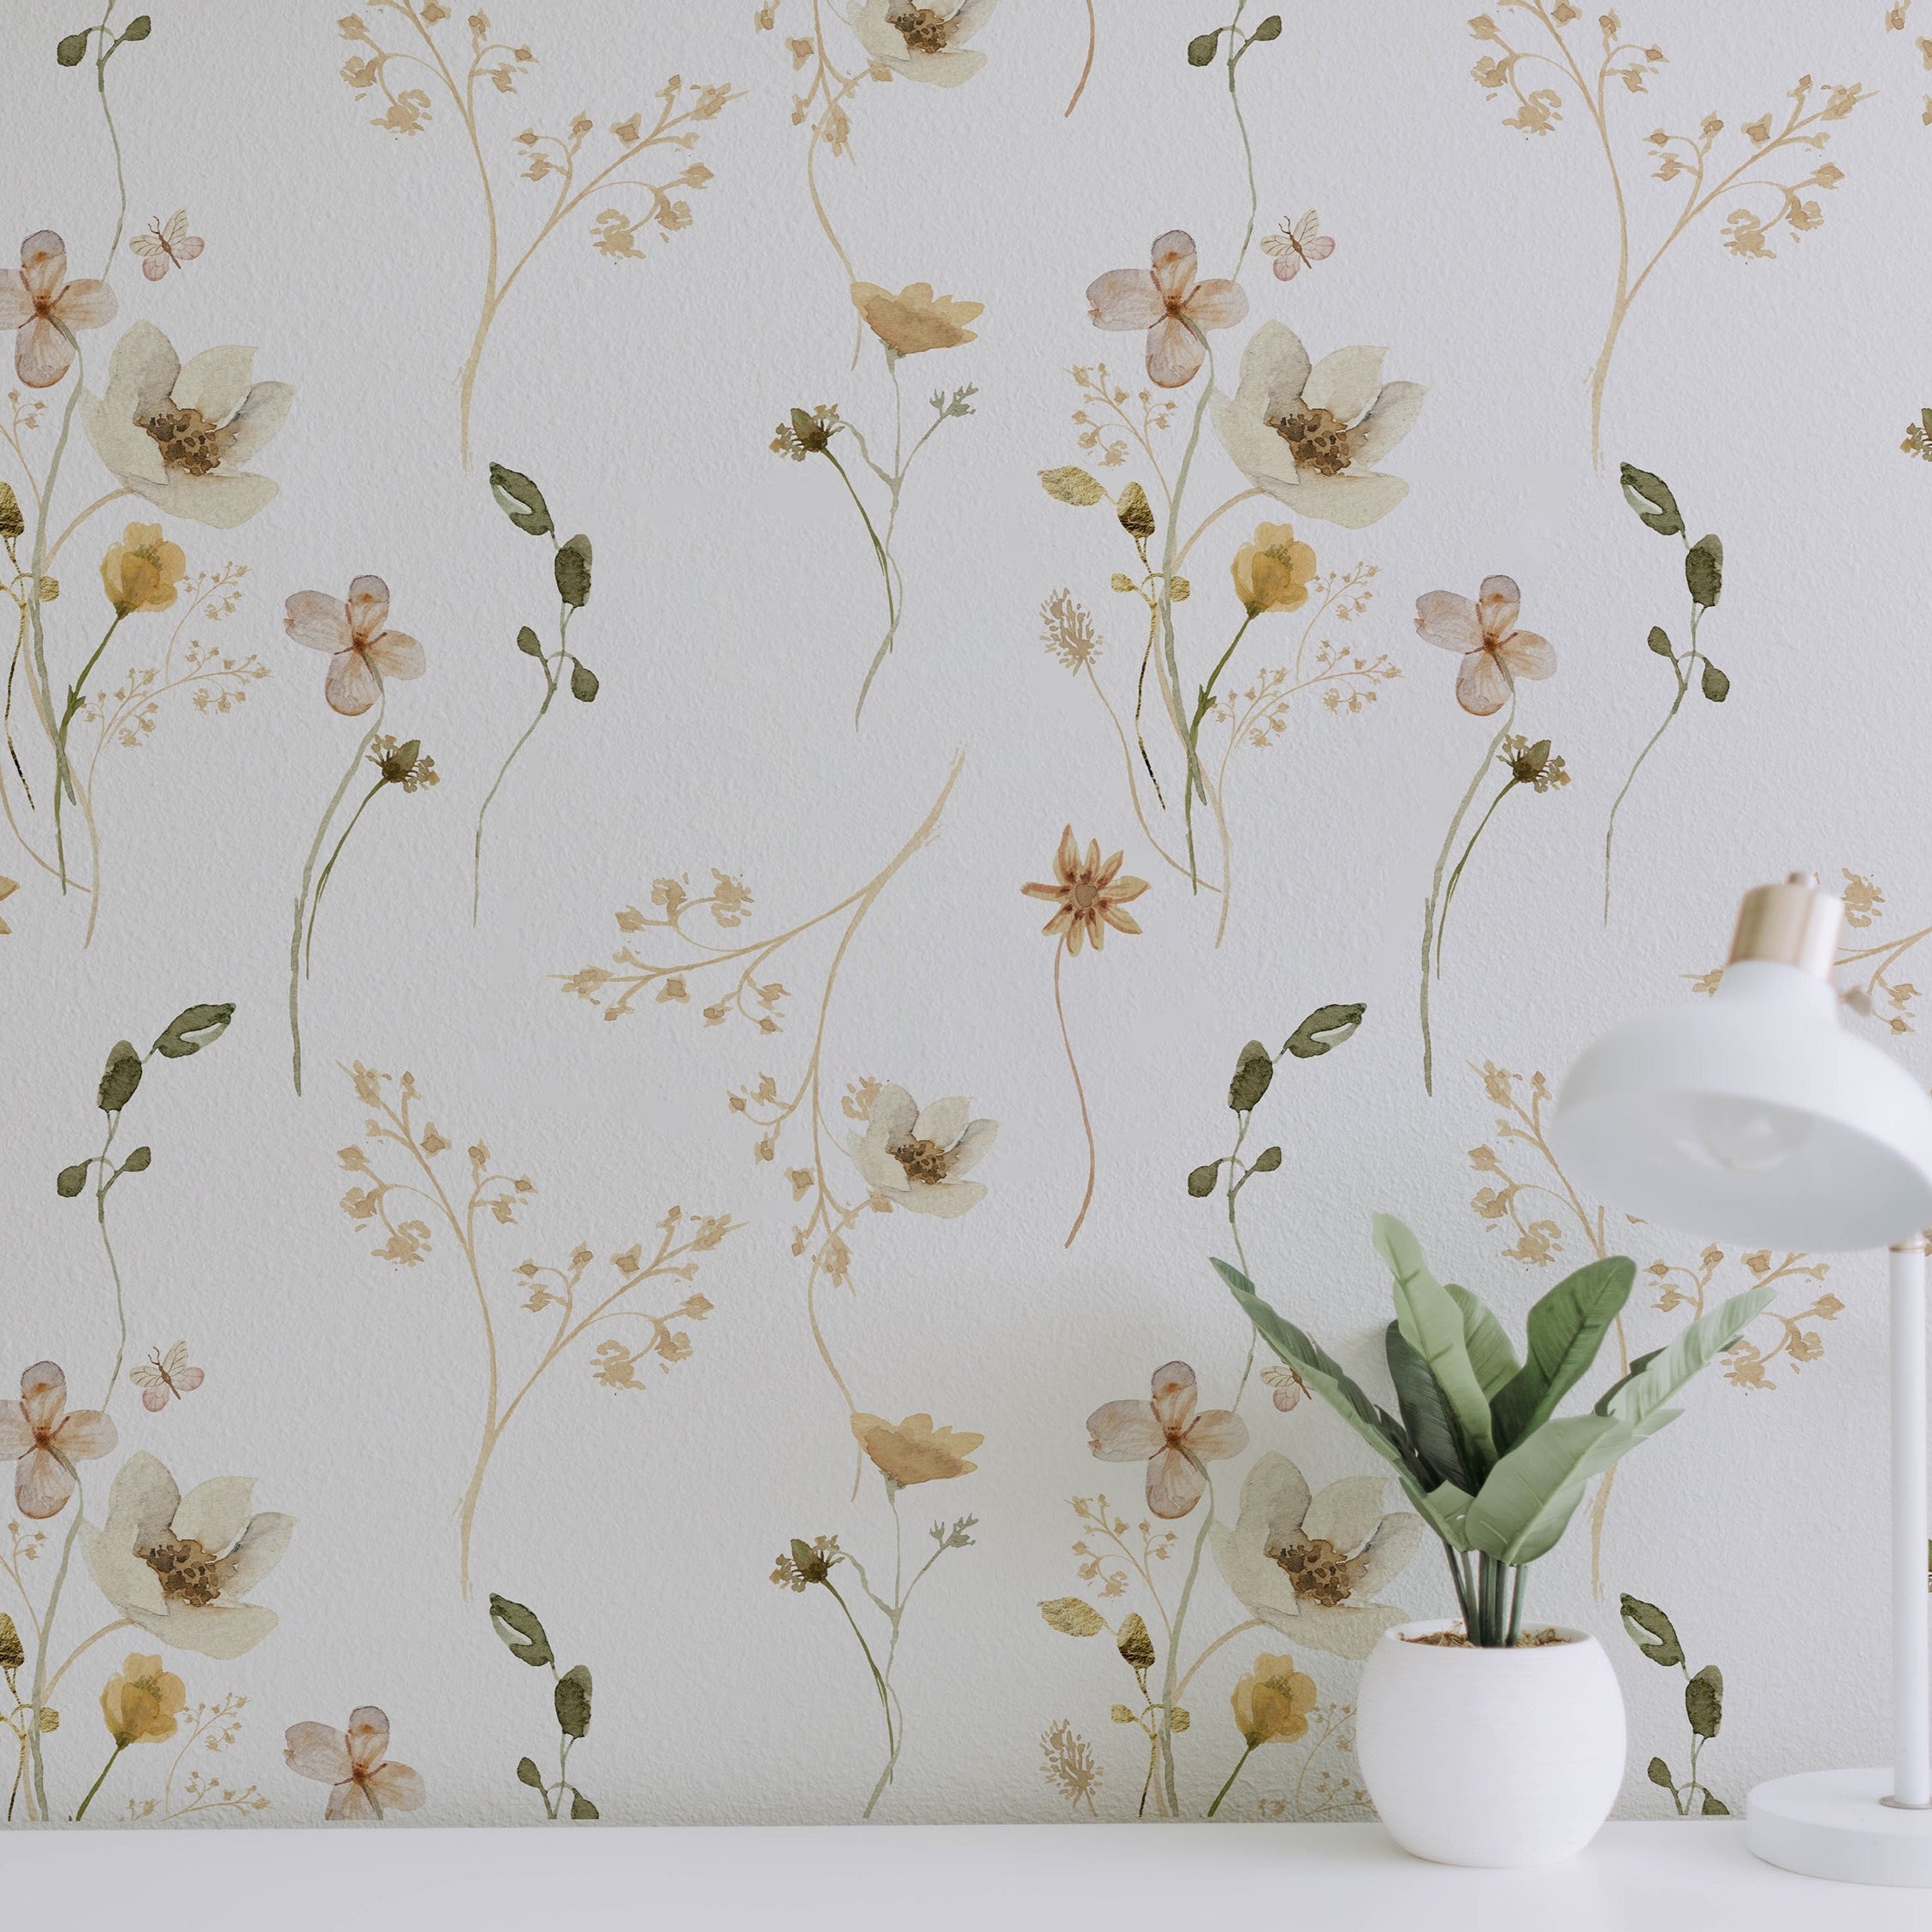 Floral Wallpaper - Plants, Leaves & Flowers